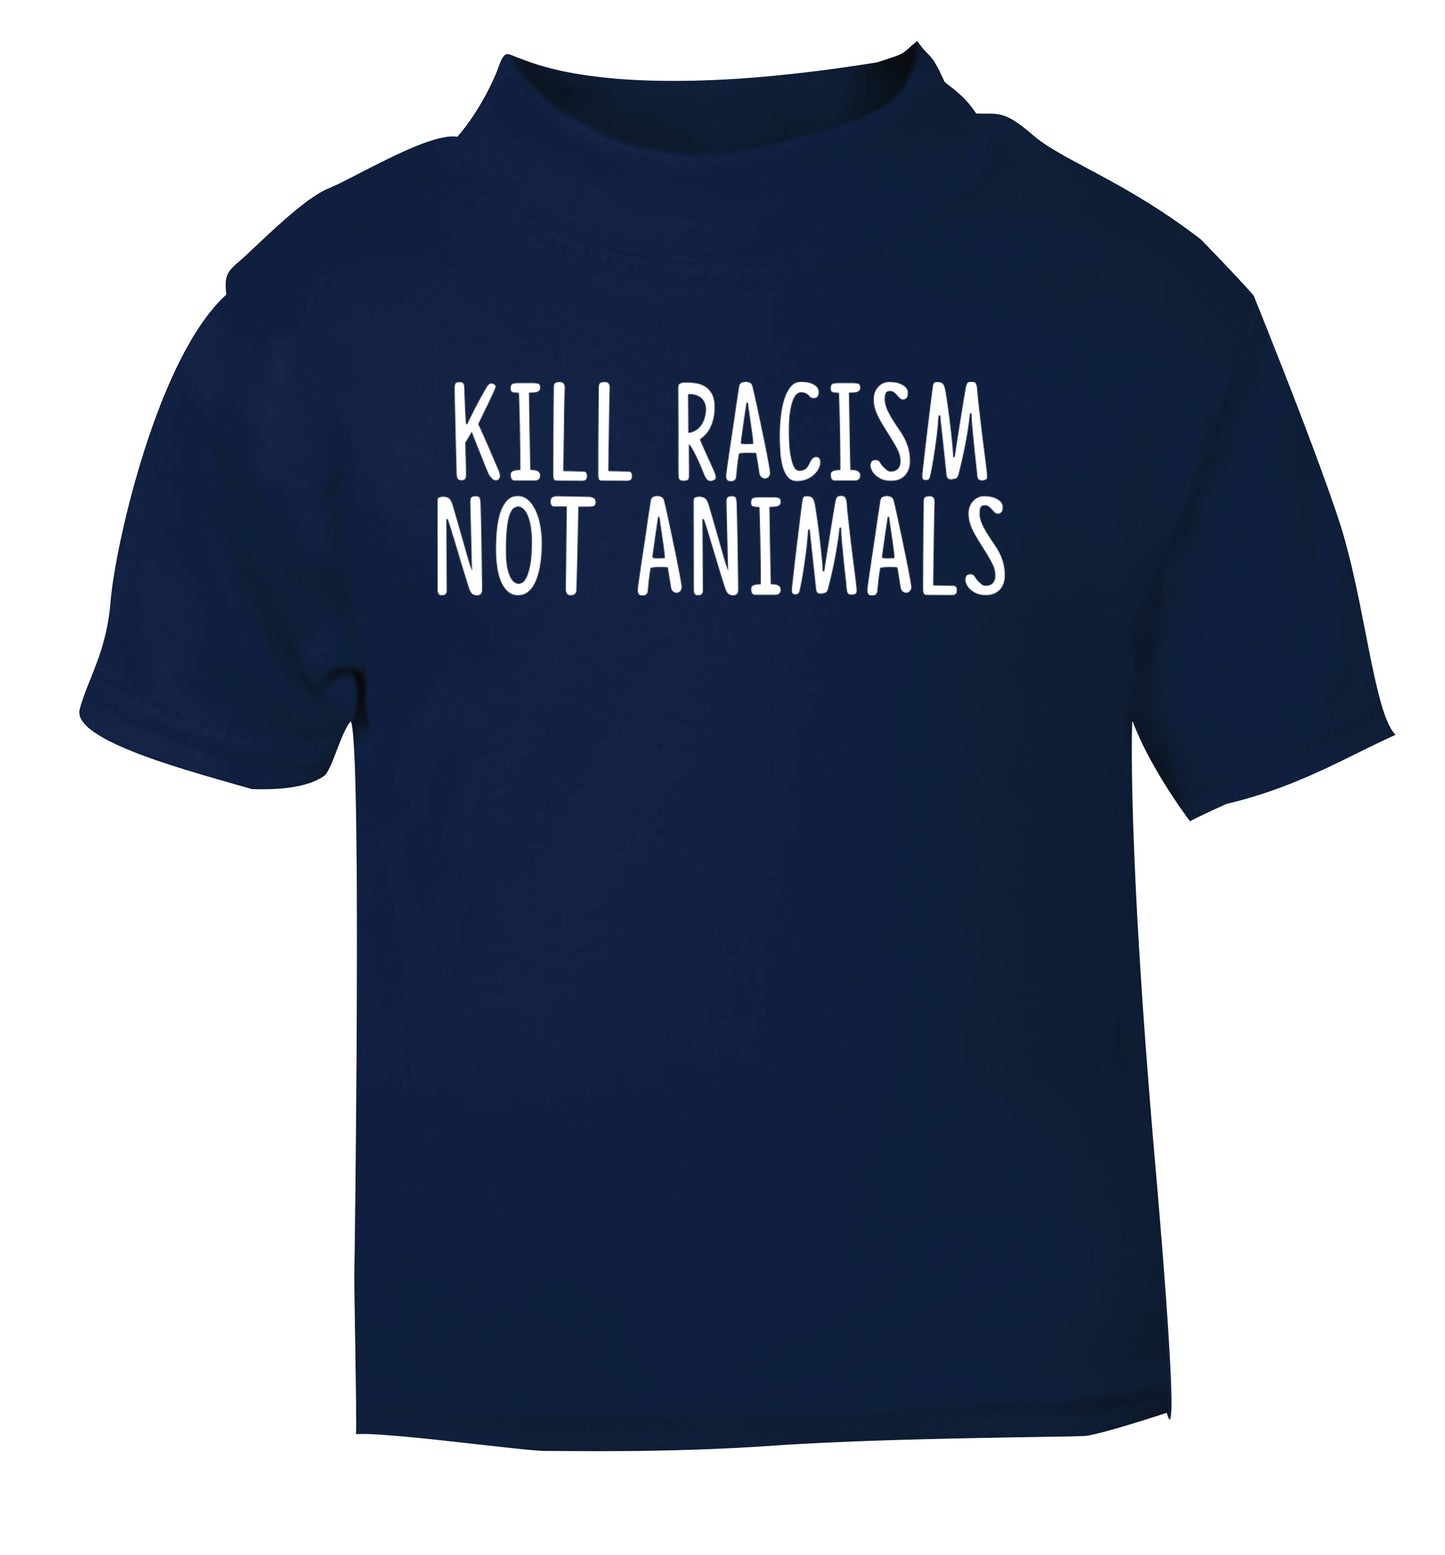 Kill Racism Not Animals navy Baby Toddler Tshirt 2 Years